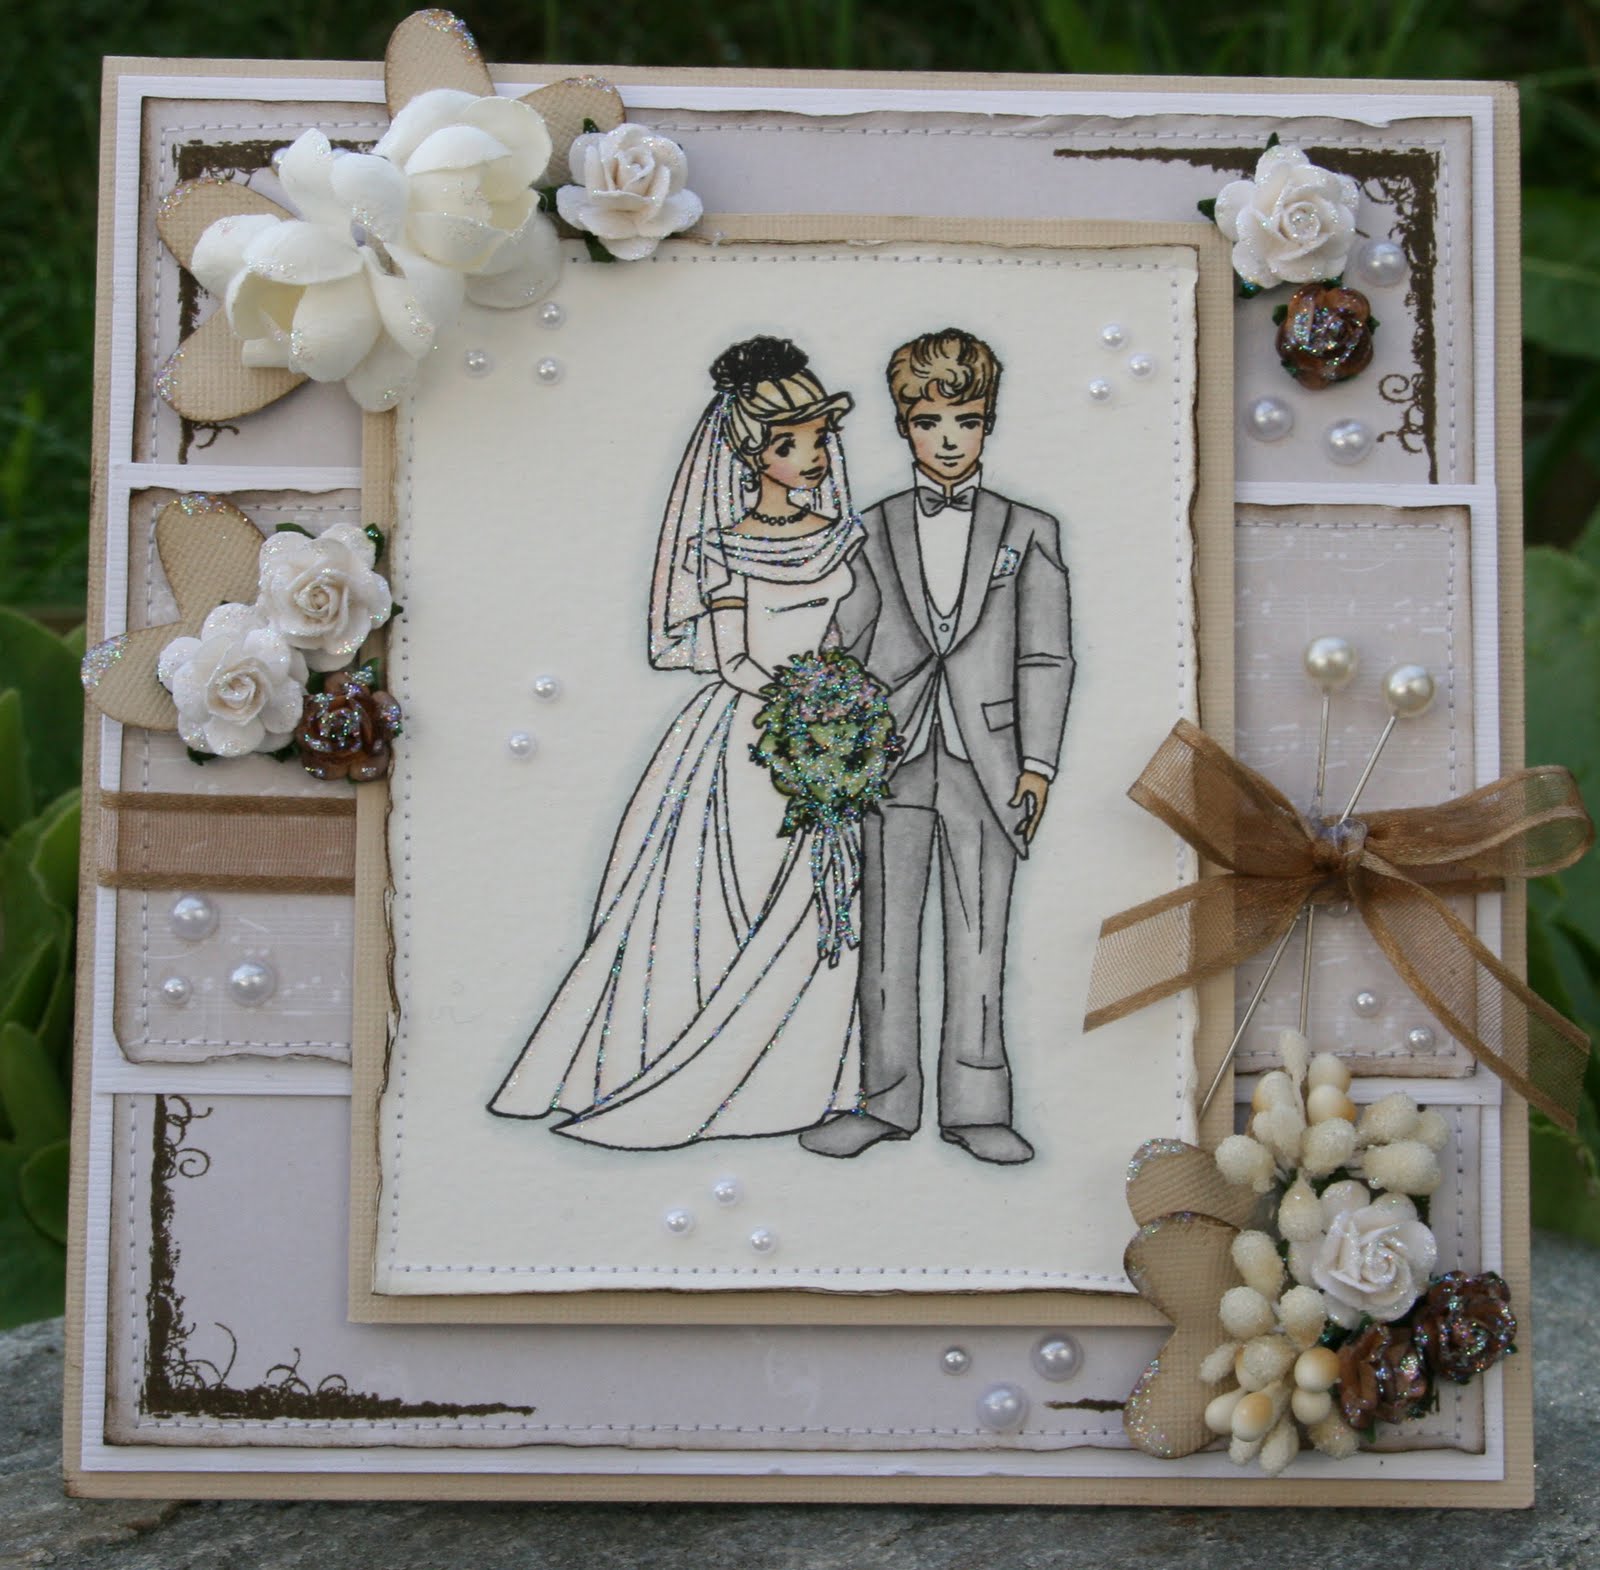 creative wedding cards design